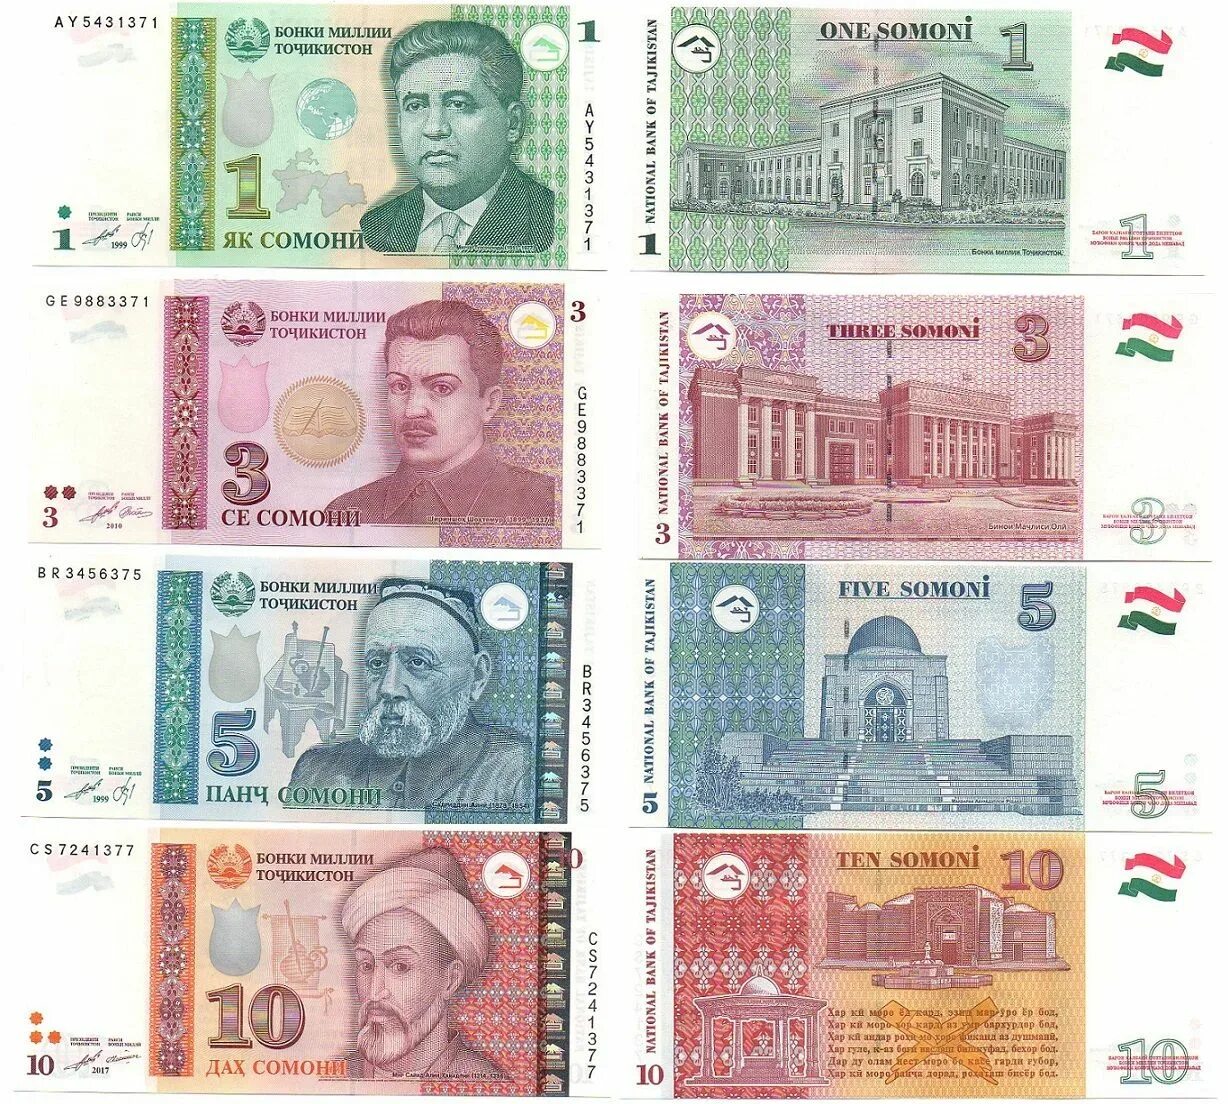 Курс точики сегодня. 1 Сомони Таджикистан купюра. Банкноты Сомони 1999 набор. Деньги Таджикистана 100 сомонй. 1 Сомони 1999 Таджикистан.